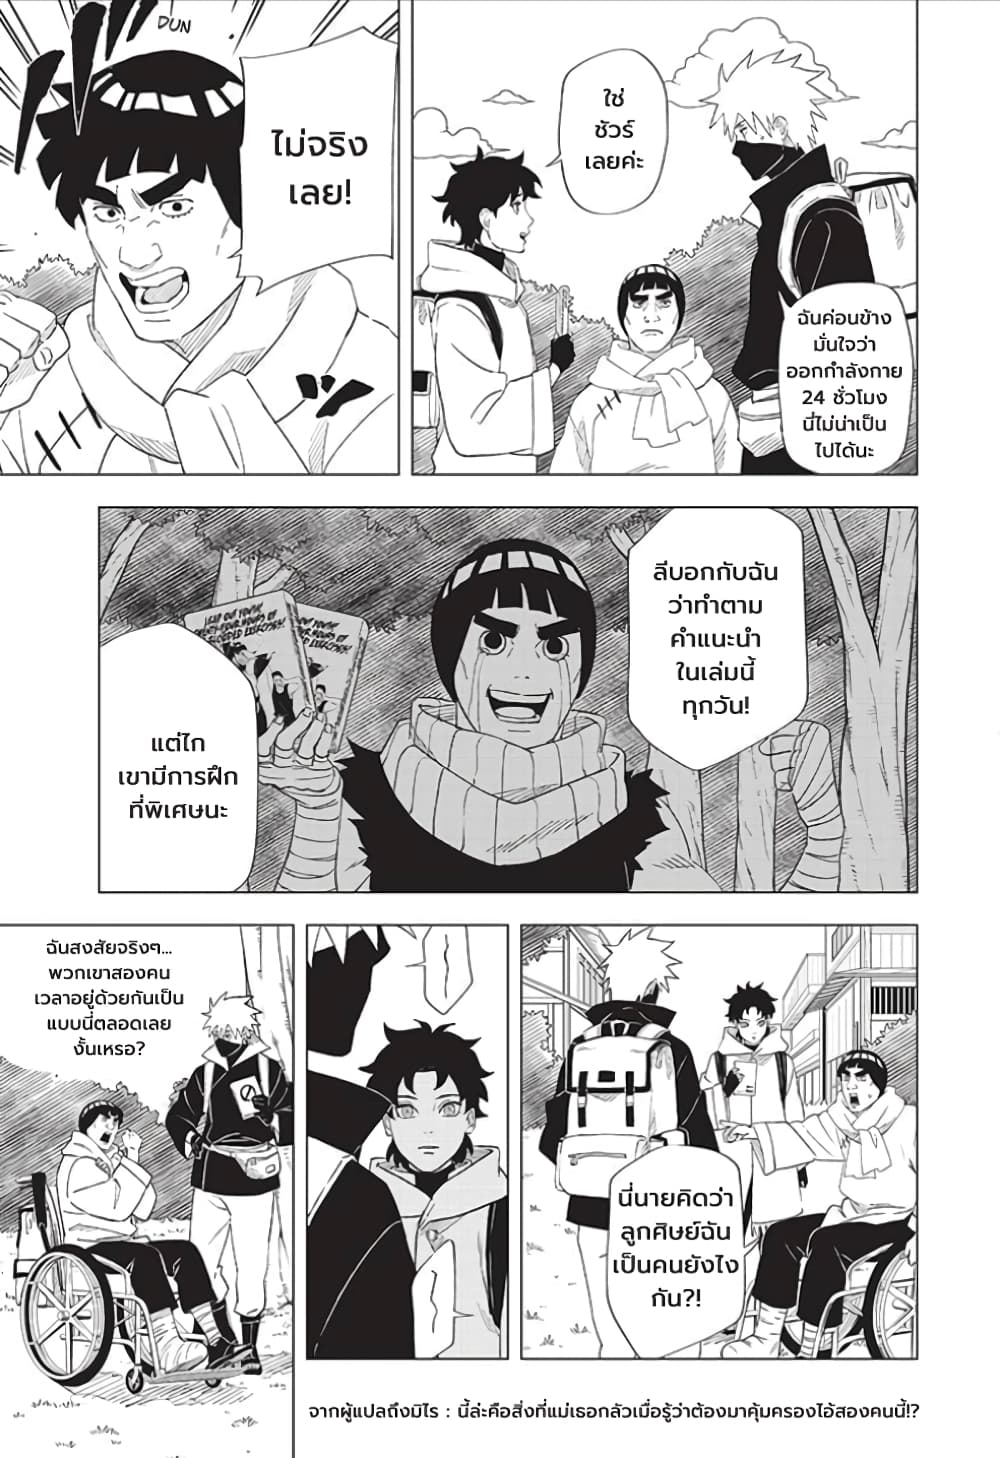 Naruto Konoha’s Story – The Steam Ninja Scrolls The Manga ตอนที่ 3 (23)